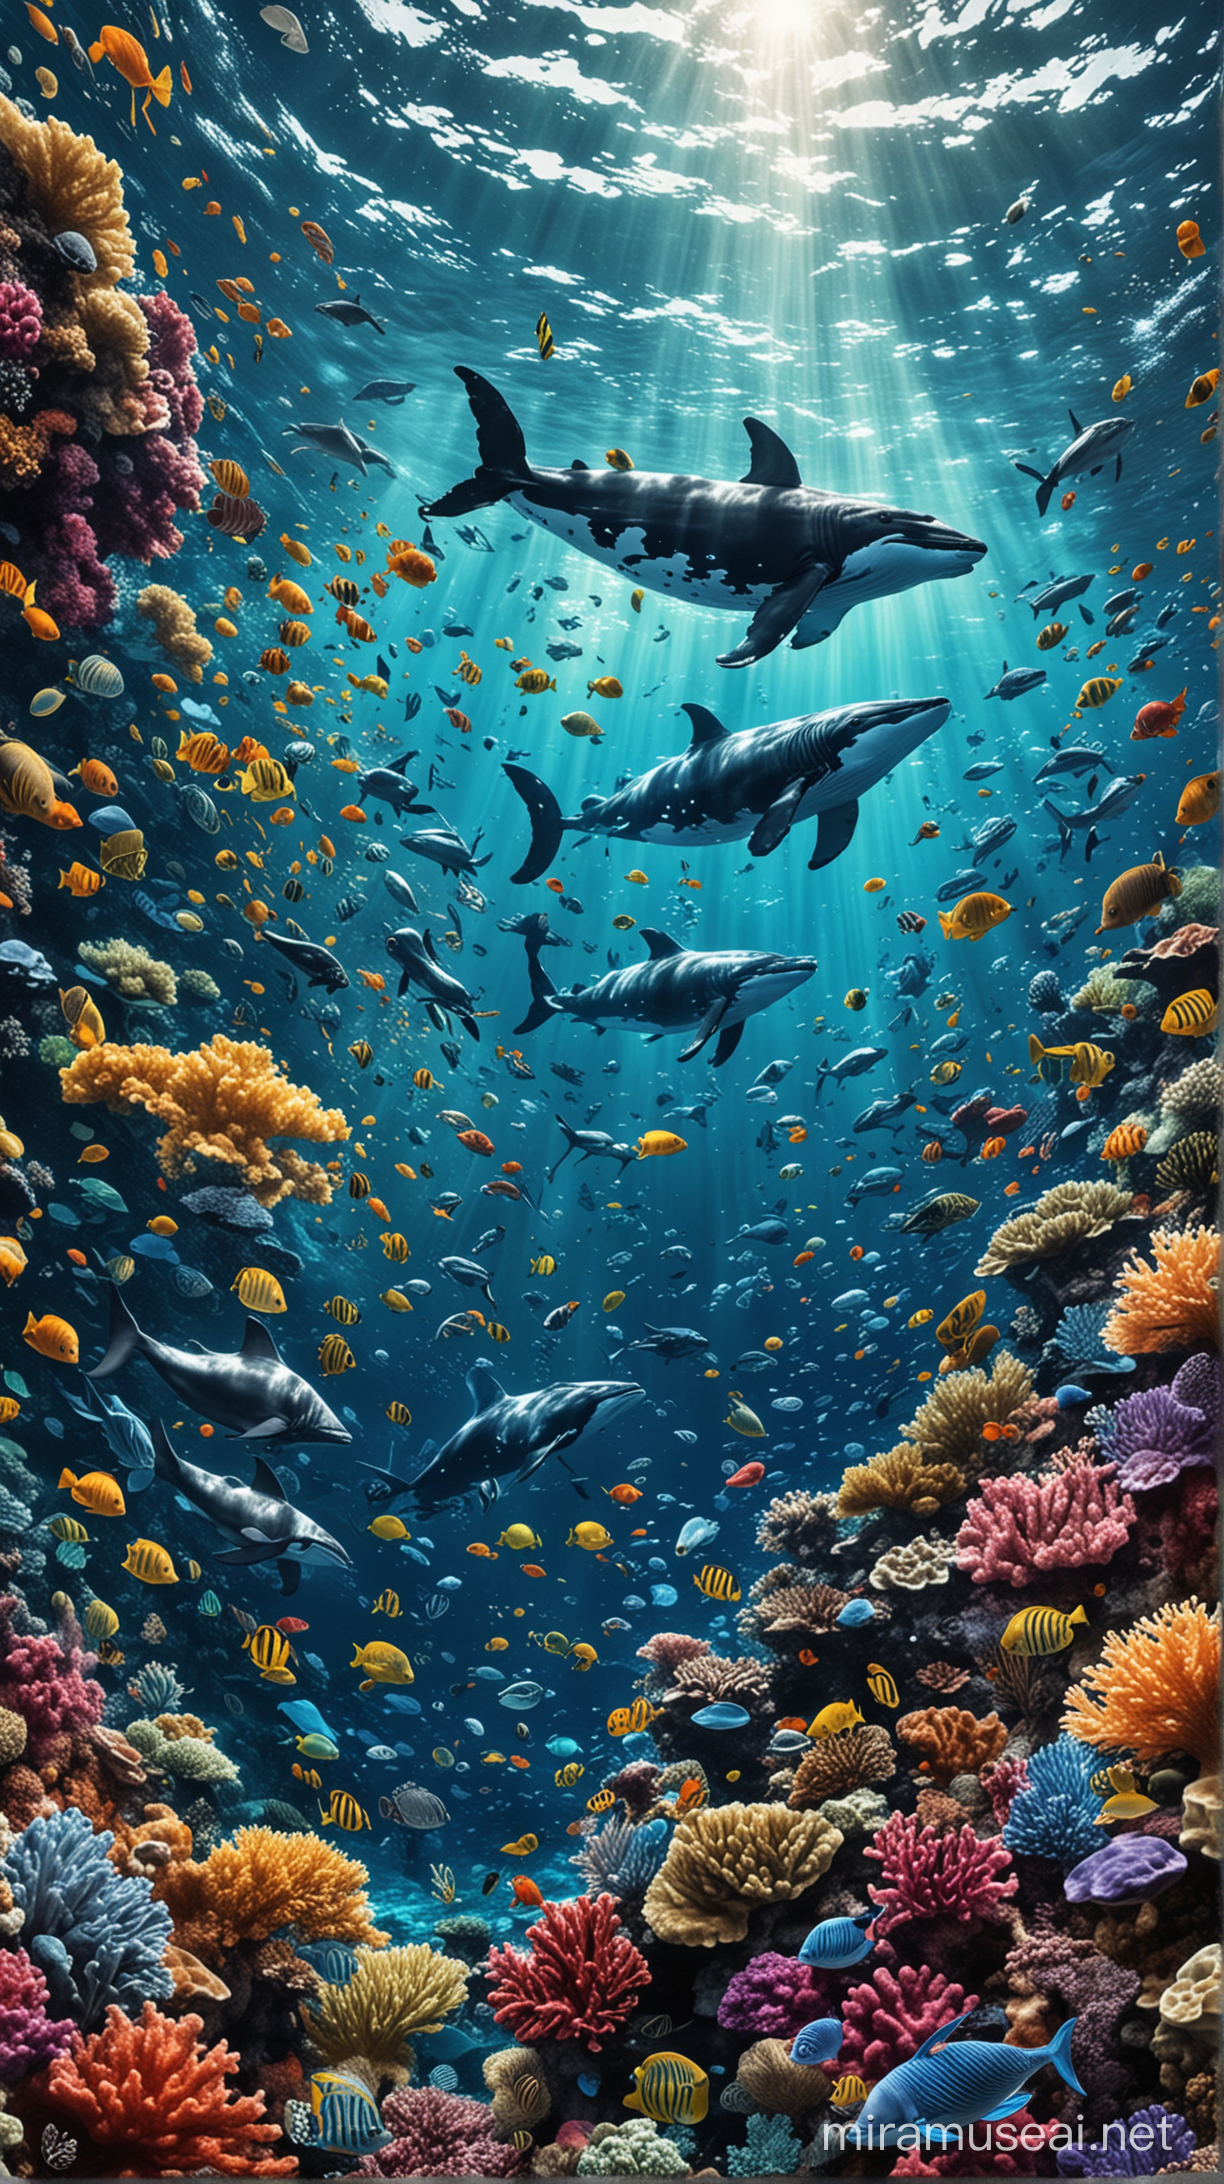 Vibrant Underwater World Dynamic Collage of Marine Life